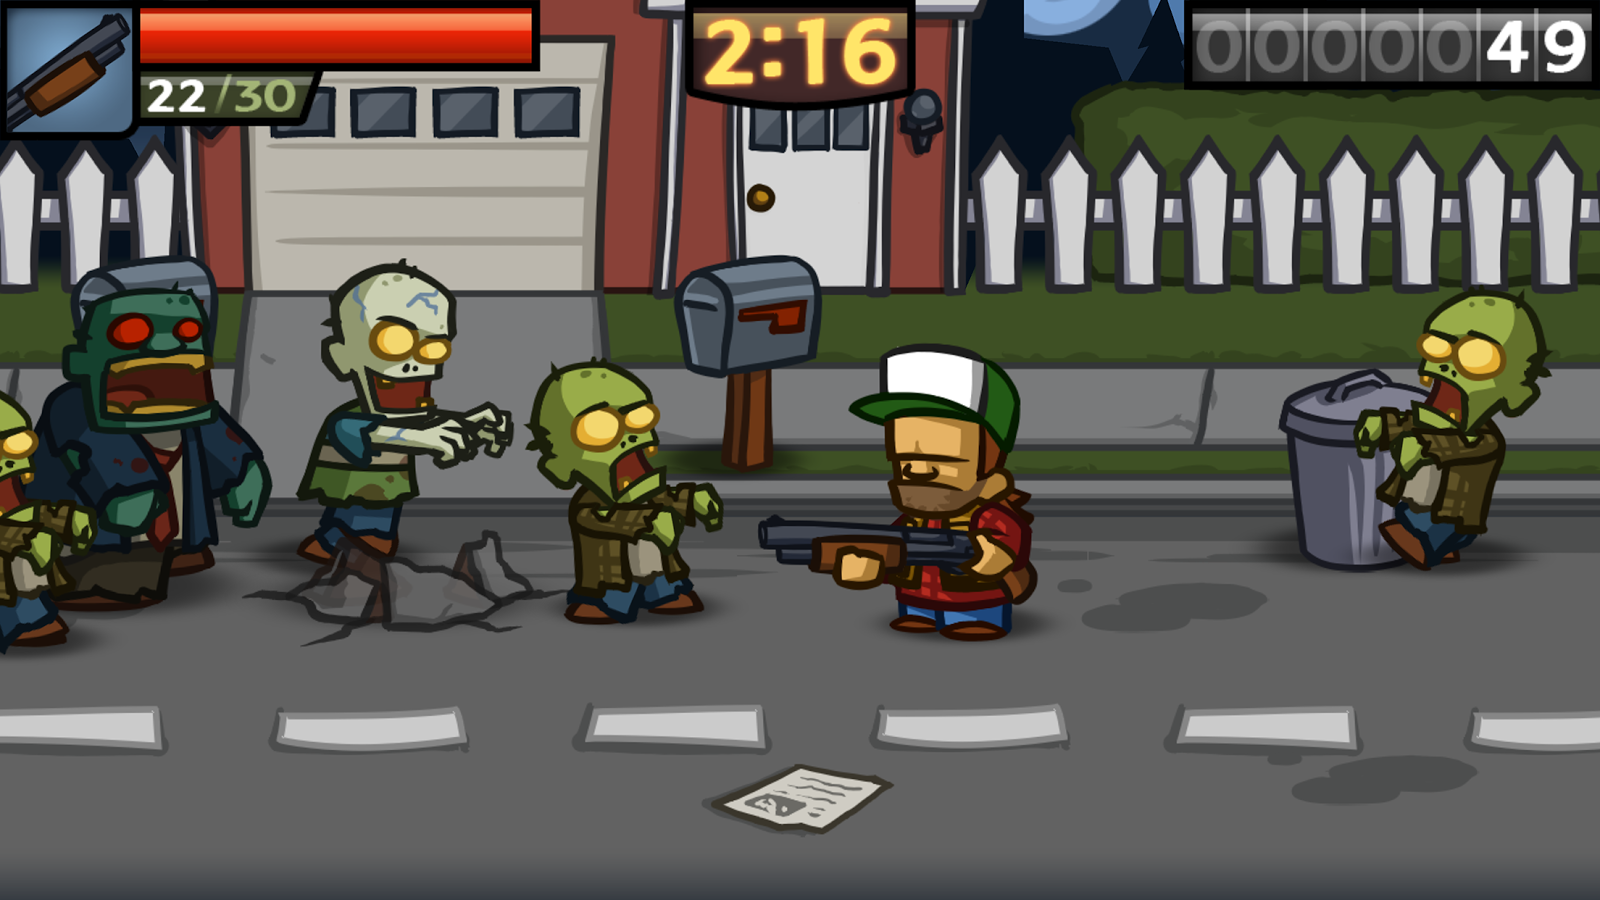    Zombieville USA 2- screenshot  